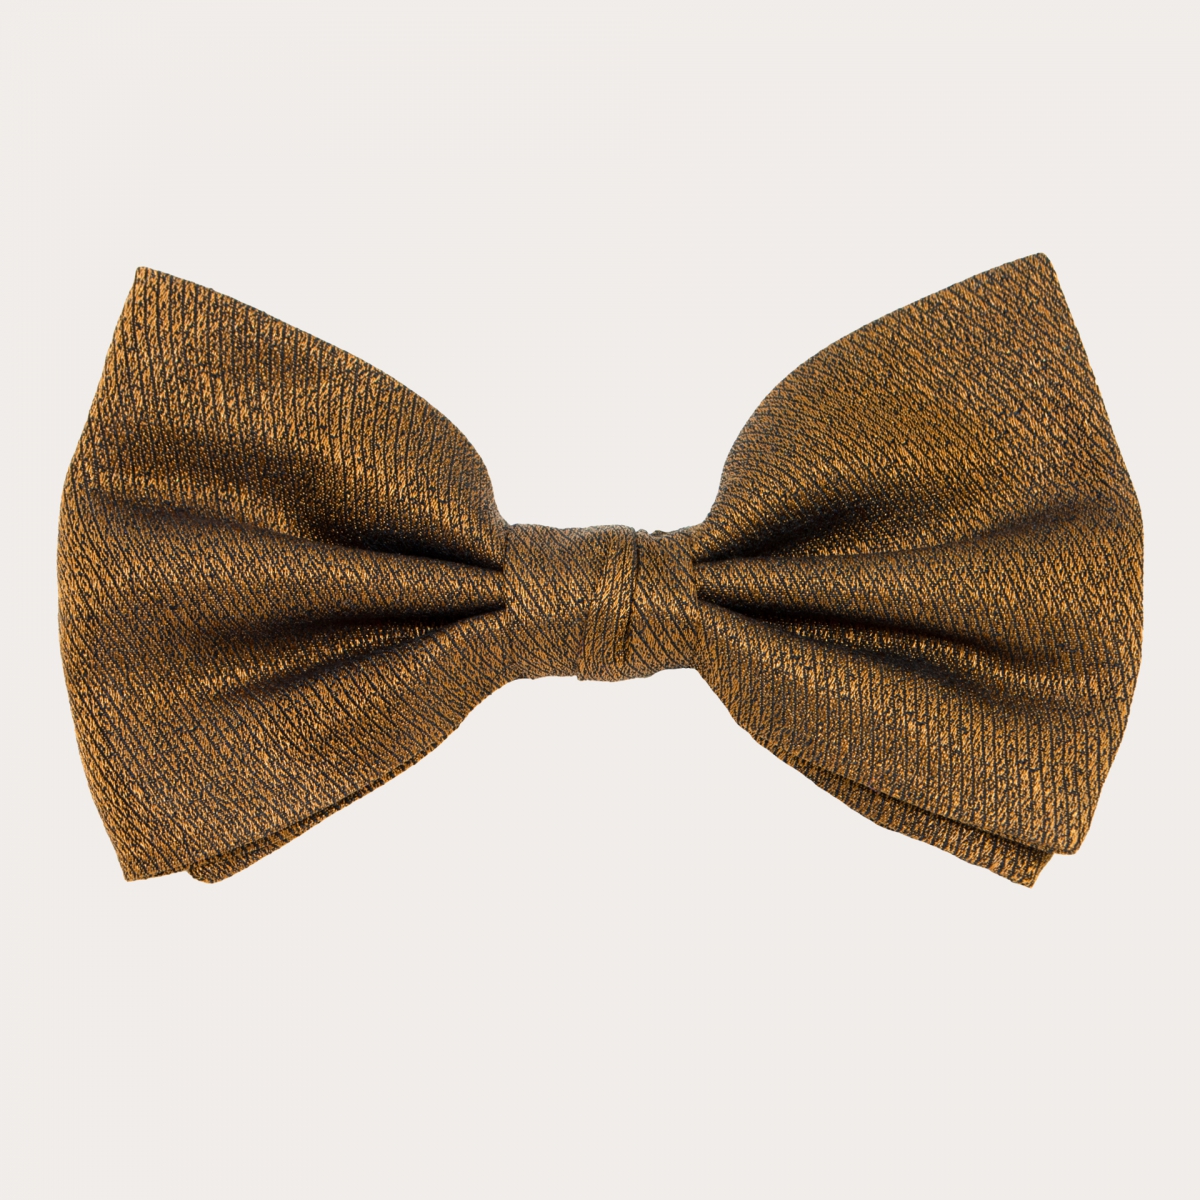 BRUCLE Elegant men's bow tie in iridescent gold jacquard silk